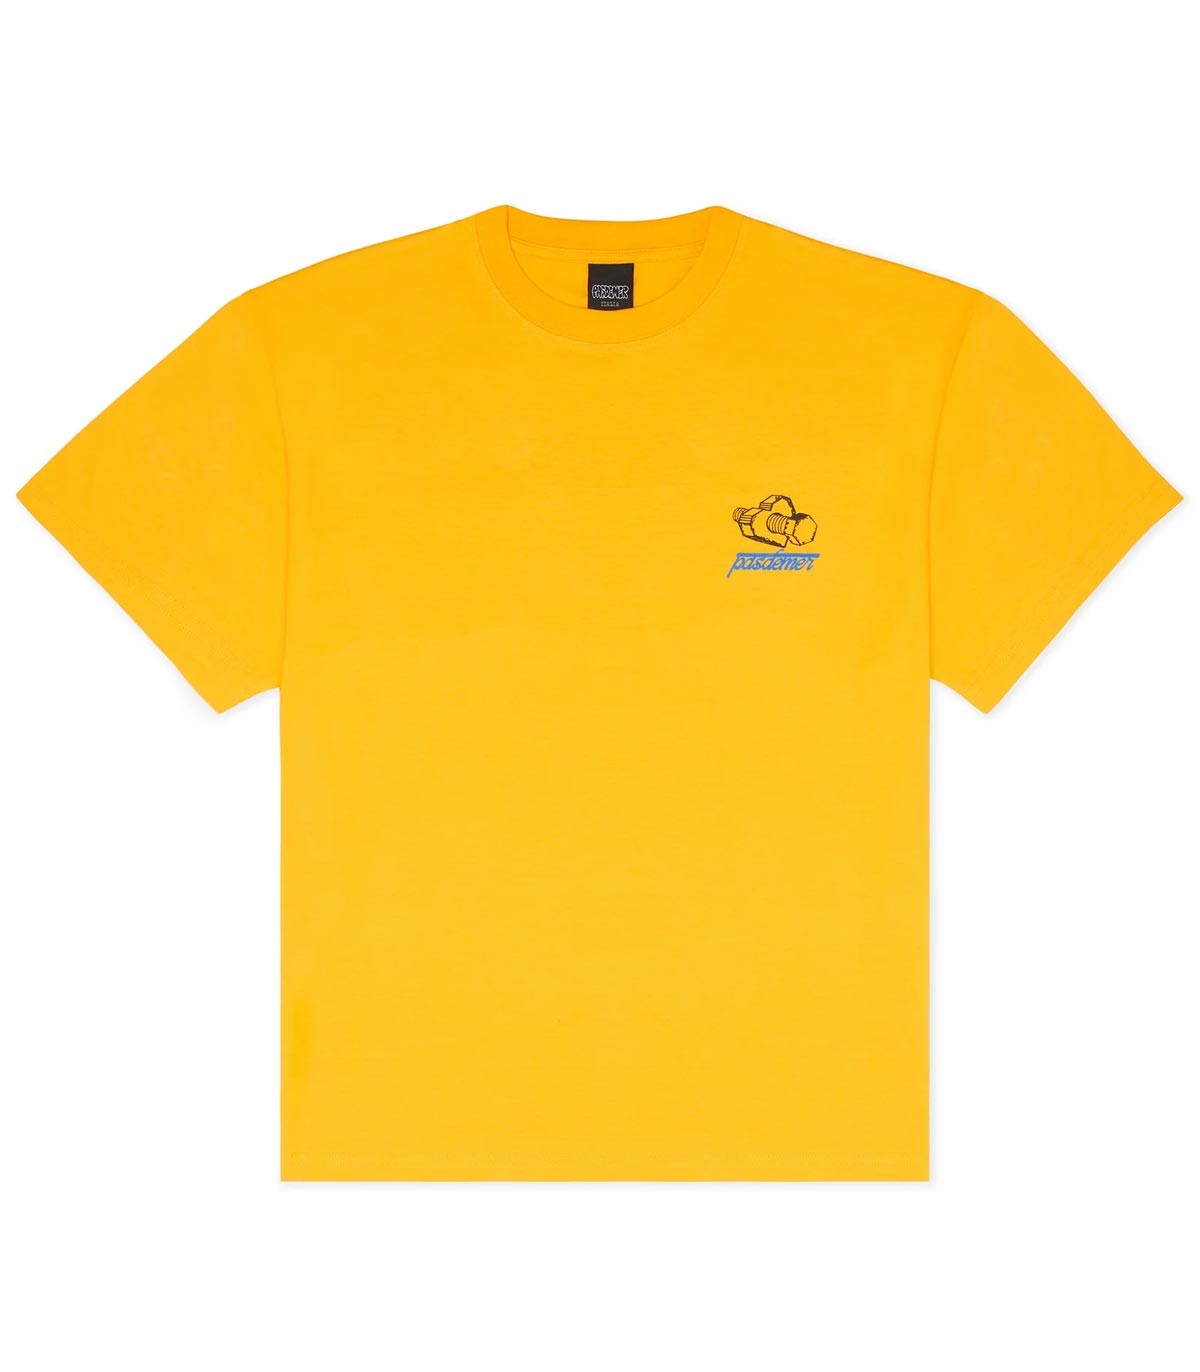 PASDEMER - Camiseta Officina Screw Love - Naranja